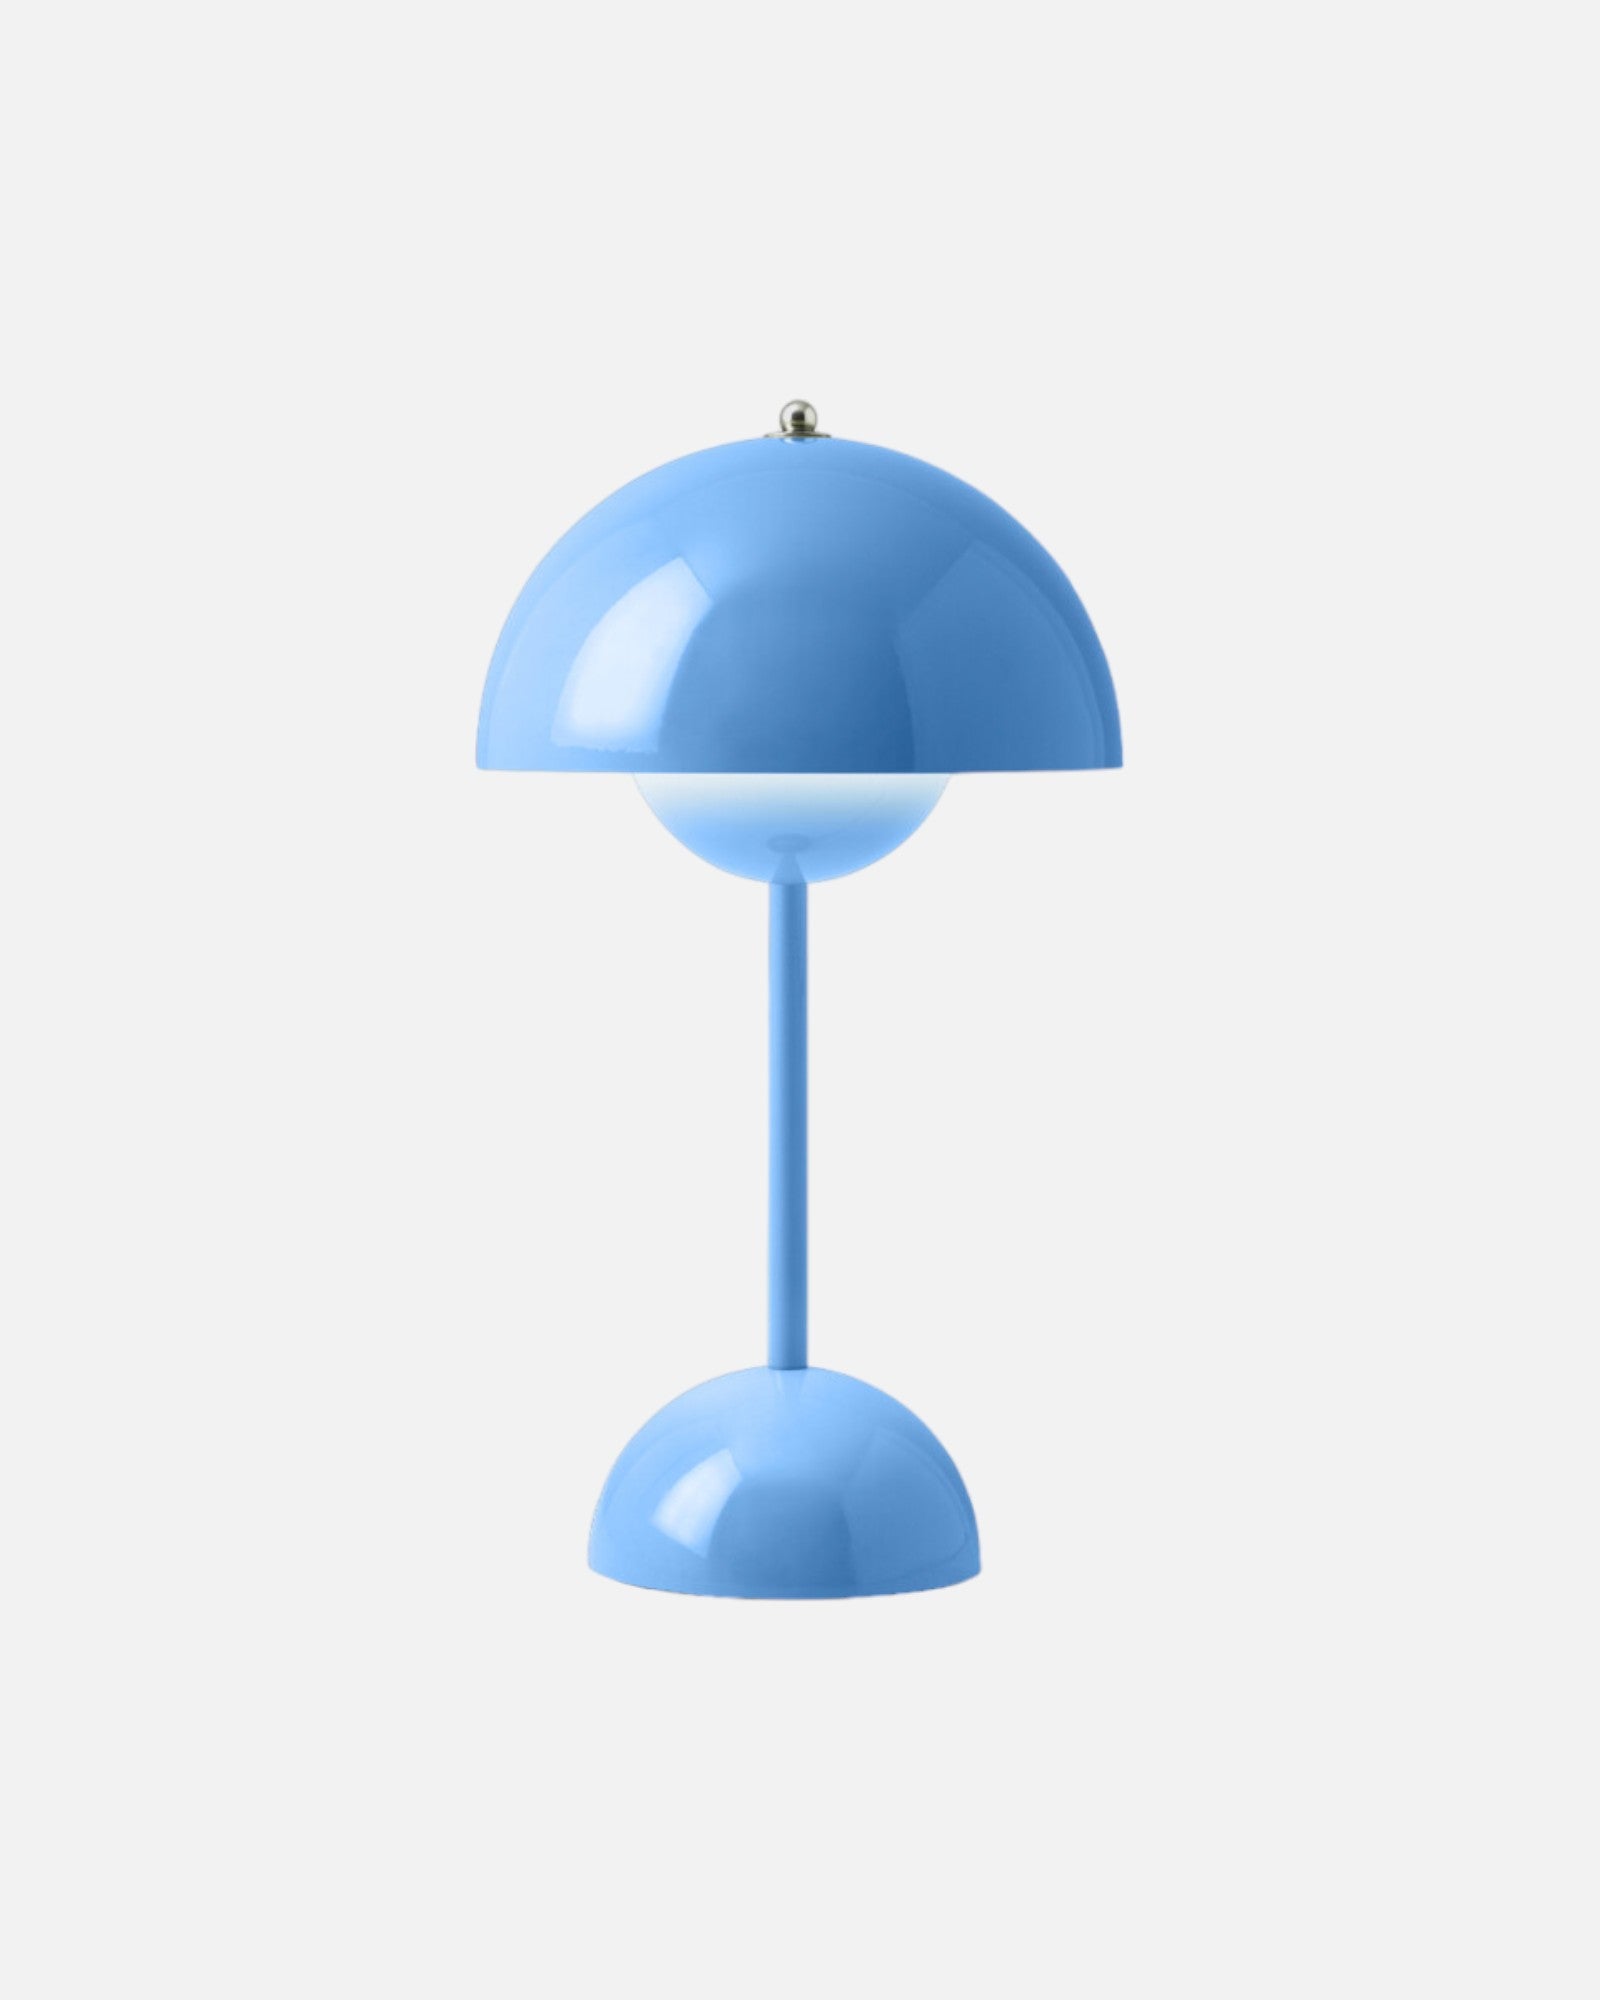 Piccolo Table Lamp - ModAura Designs